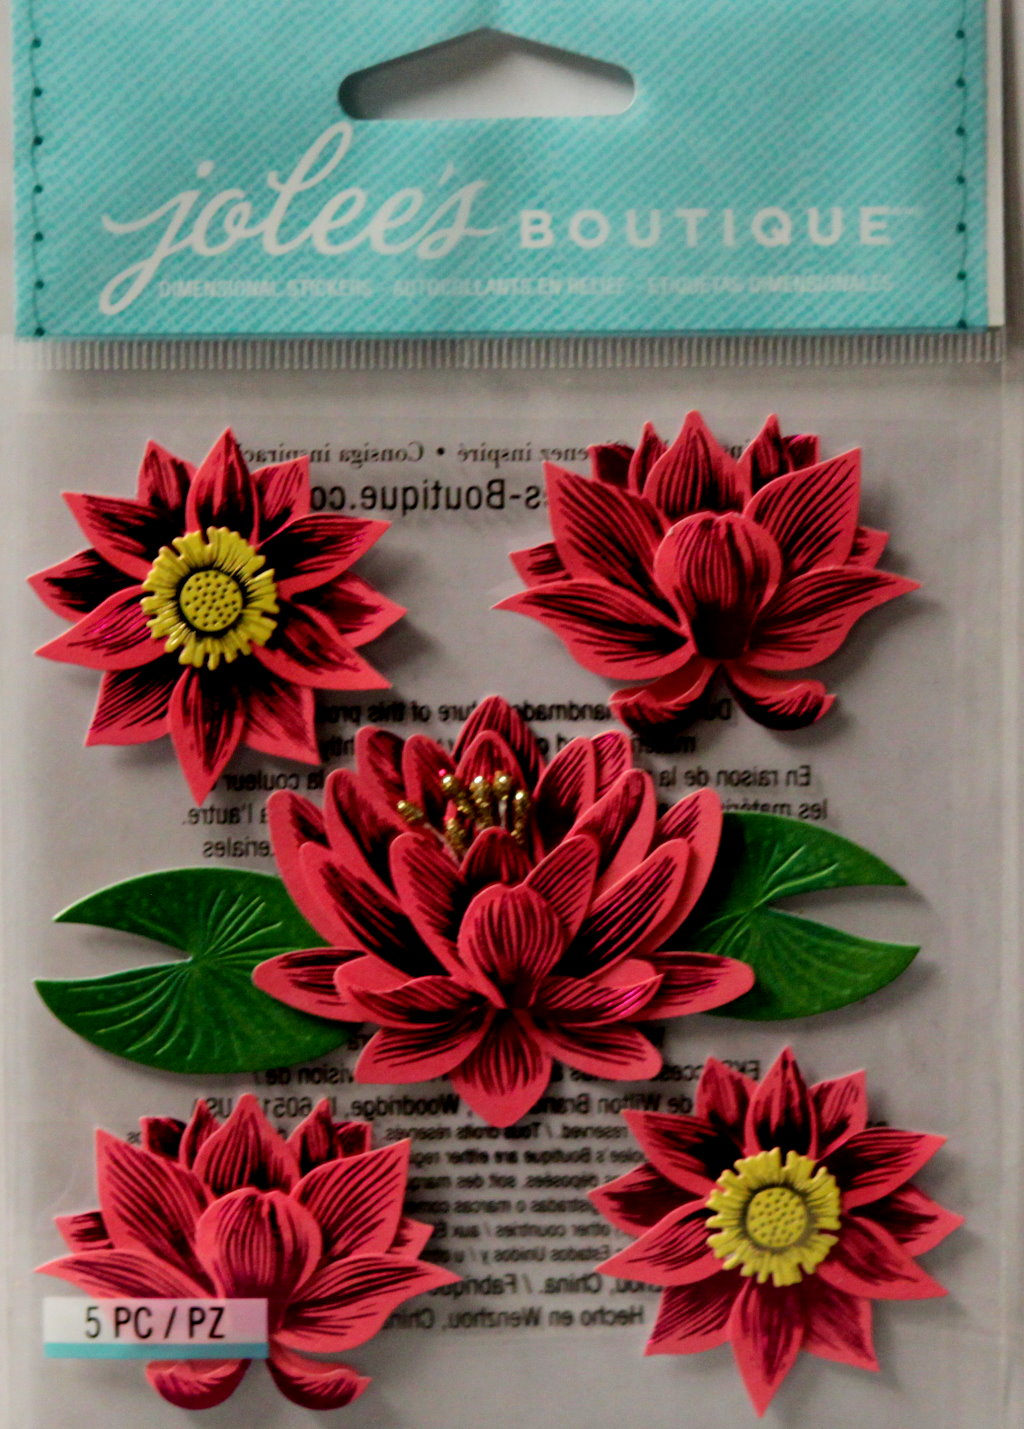 Jolee's Boutique Lotus Dimensional Scrapbook Stickers